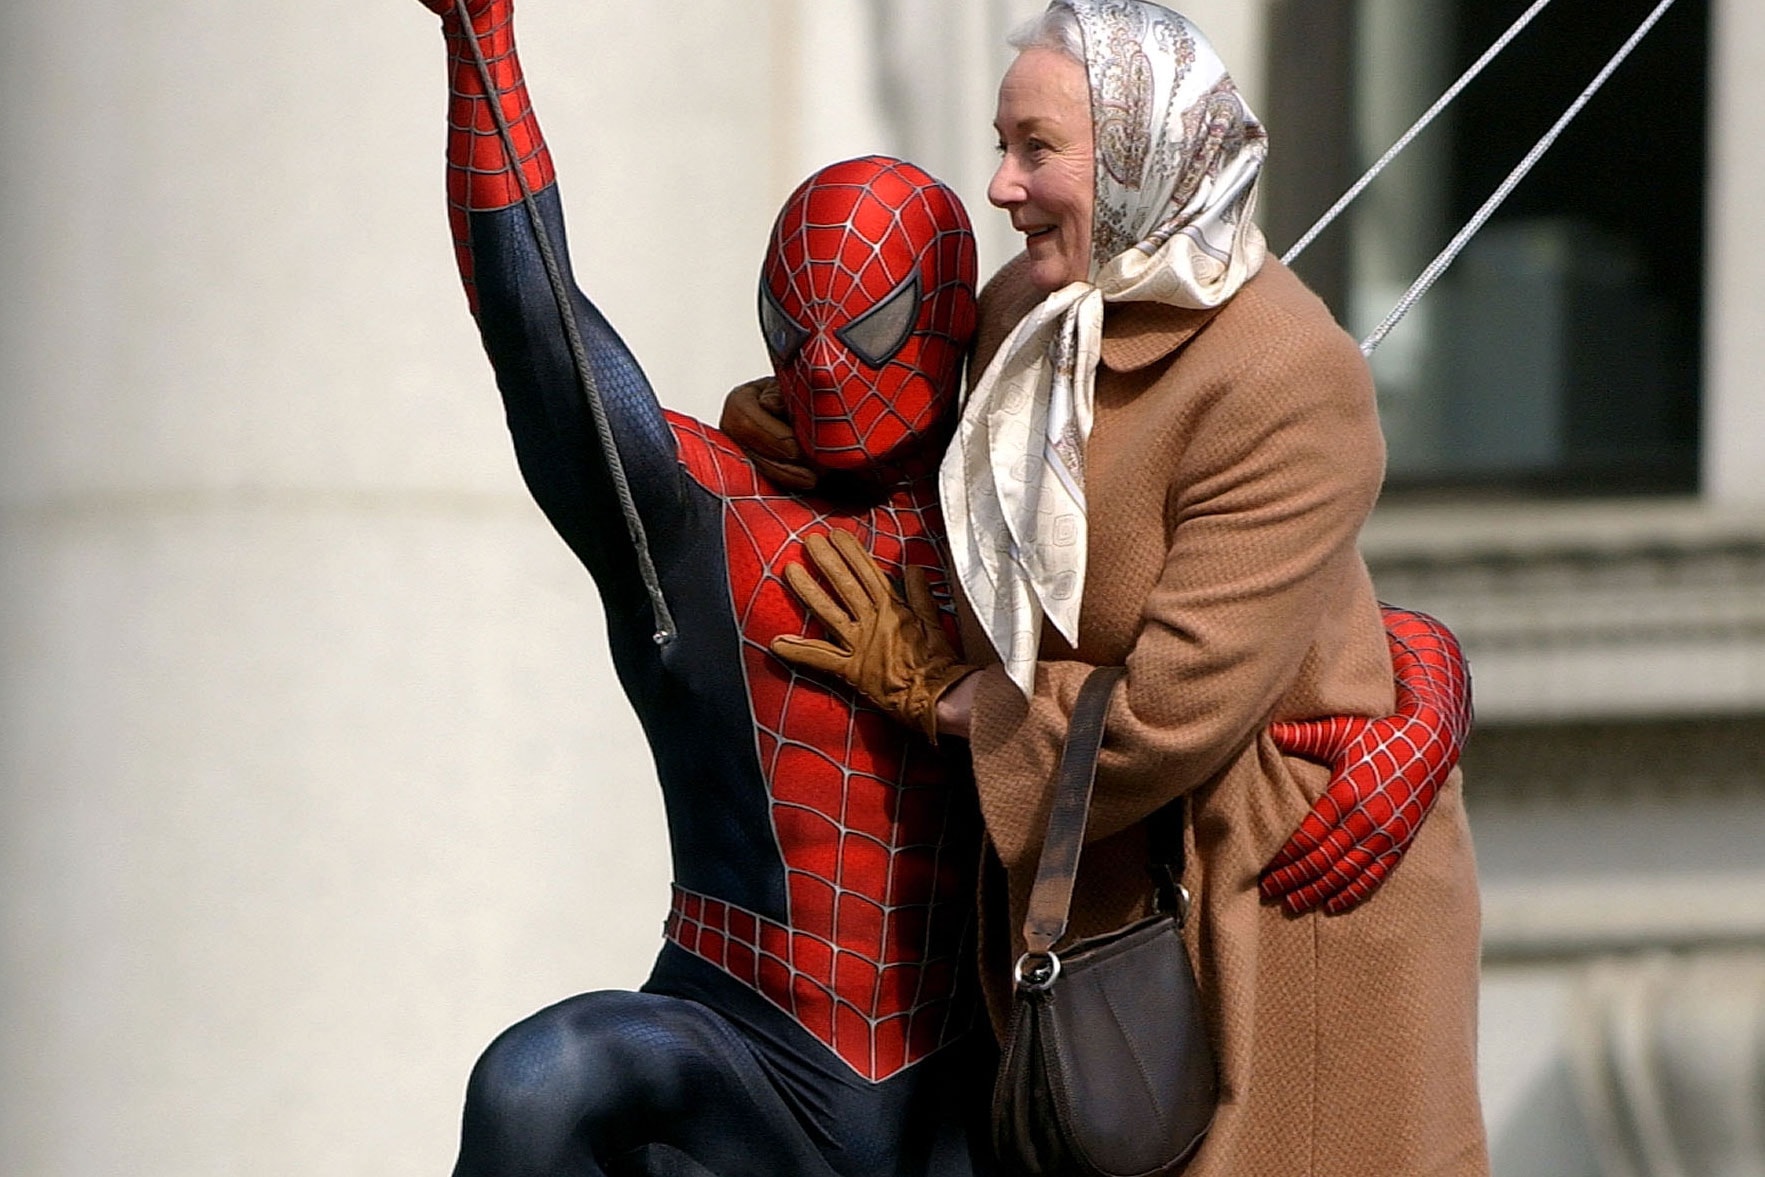 Marvel Spider-Man Costume Set & Mask Medium